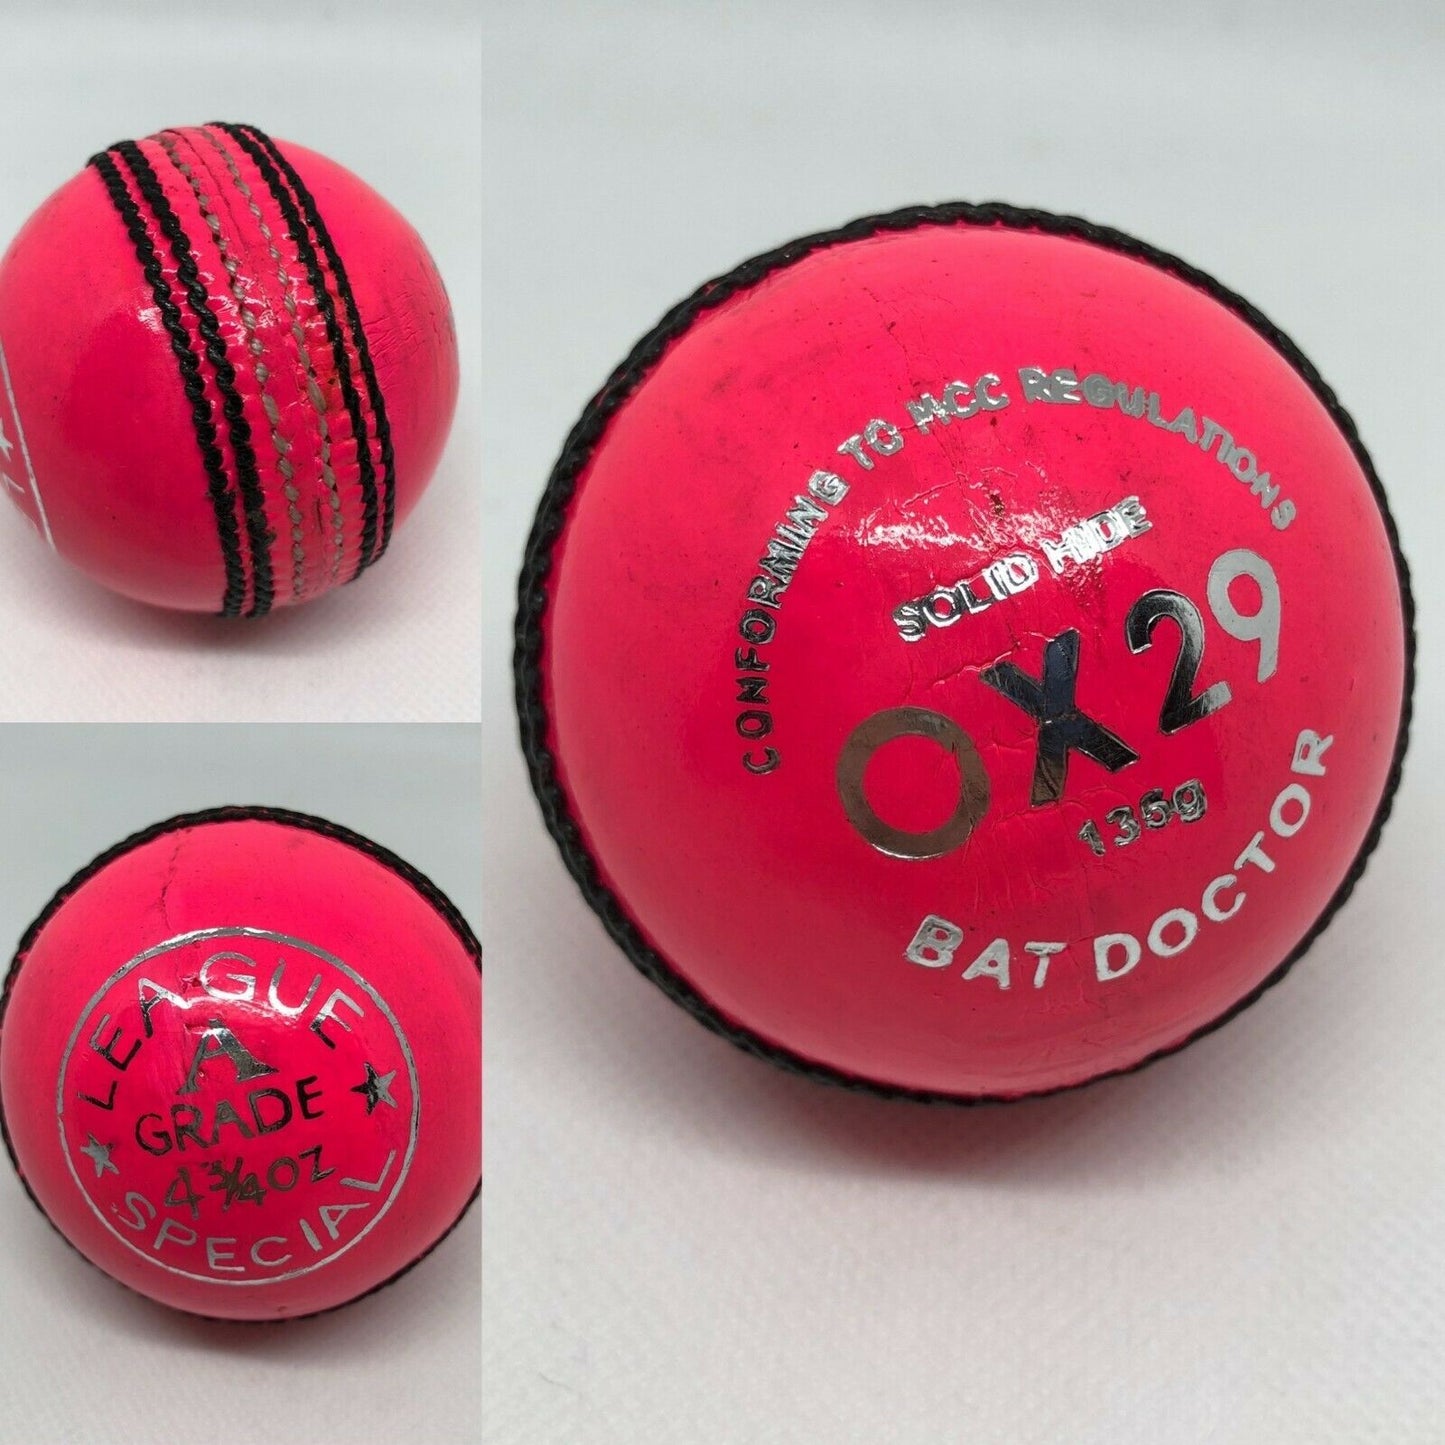 Junior Pink League Special 'A' Grade 4 3/4 oz / 135 grams match Cricket Ball